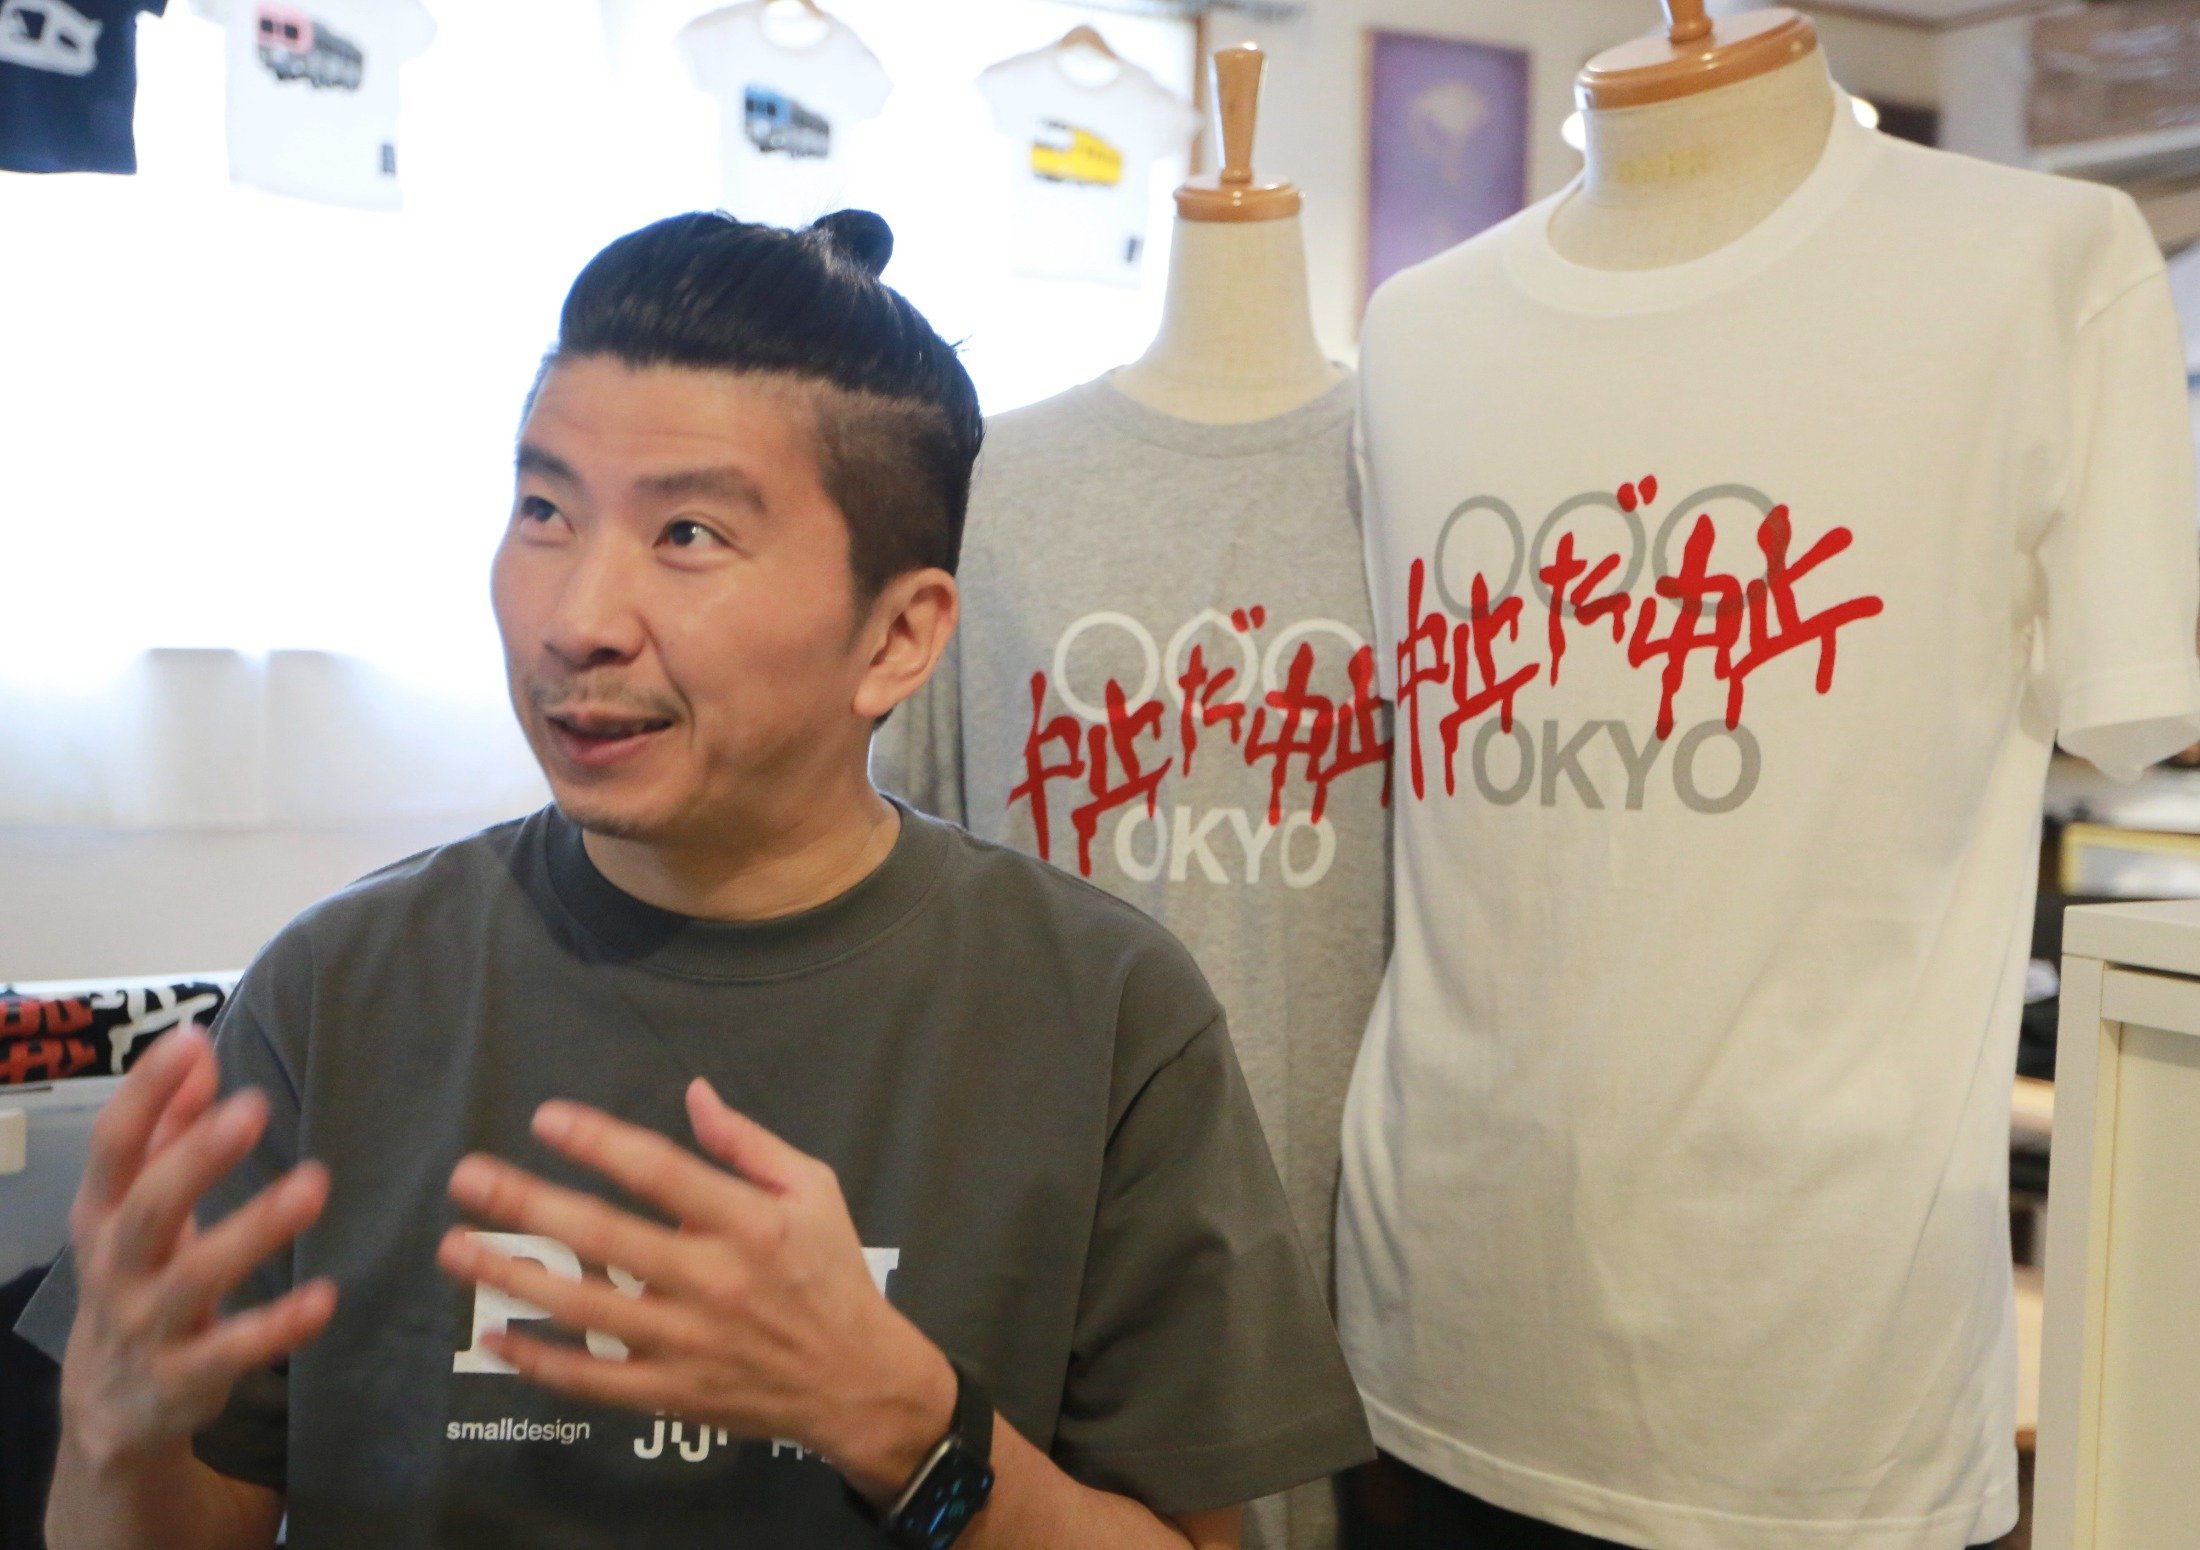 Designer Susumu Kikutake speaks during an interview with The Associated Press in Tokyo, Japan, June 9, 2021. (AP Photo)